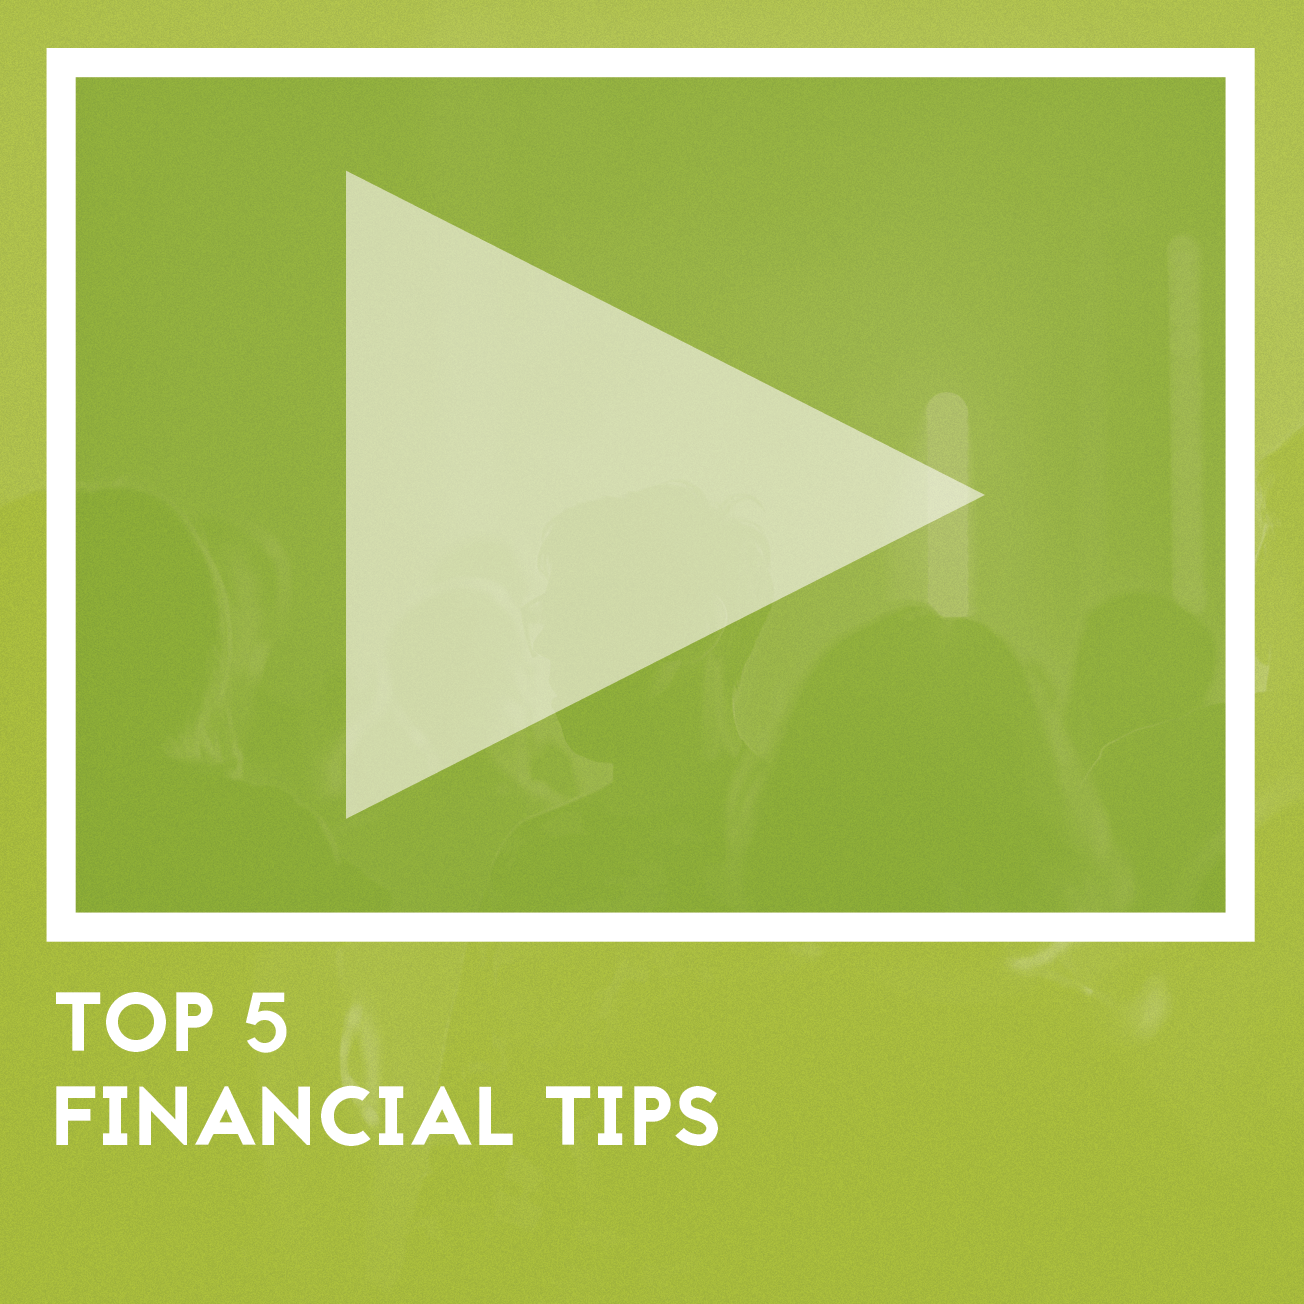 Top 5 Financial Tips